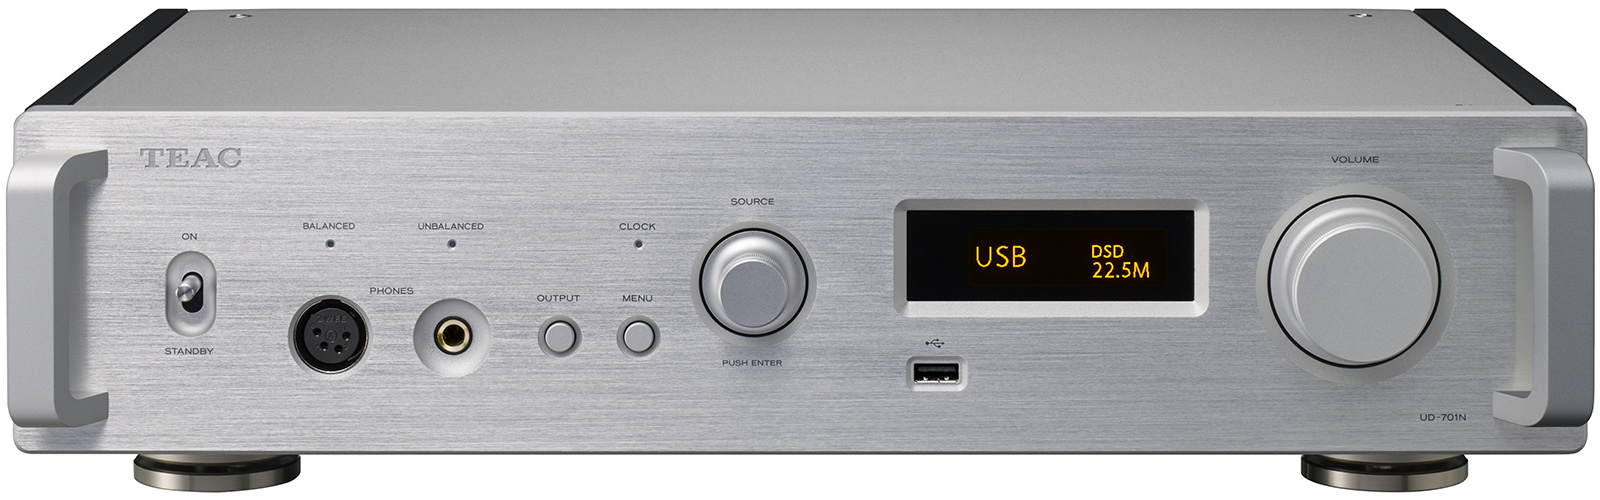 Сетевые аудио проигрыватели Teac UD-701N silver сетевые аудио проигрыватели electrocompaniet ecm 1